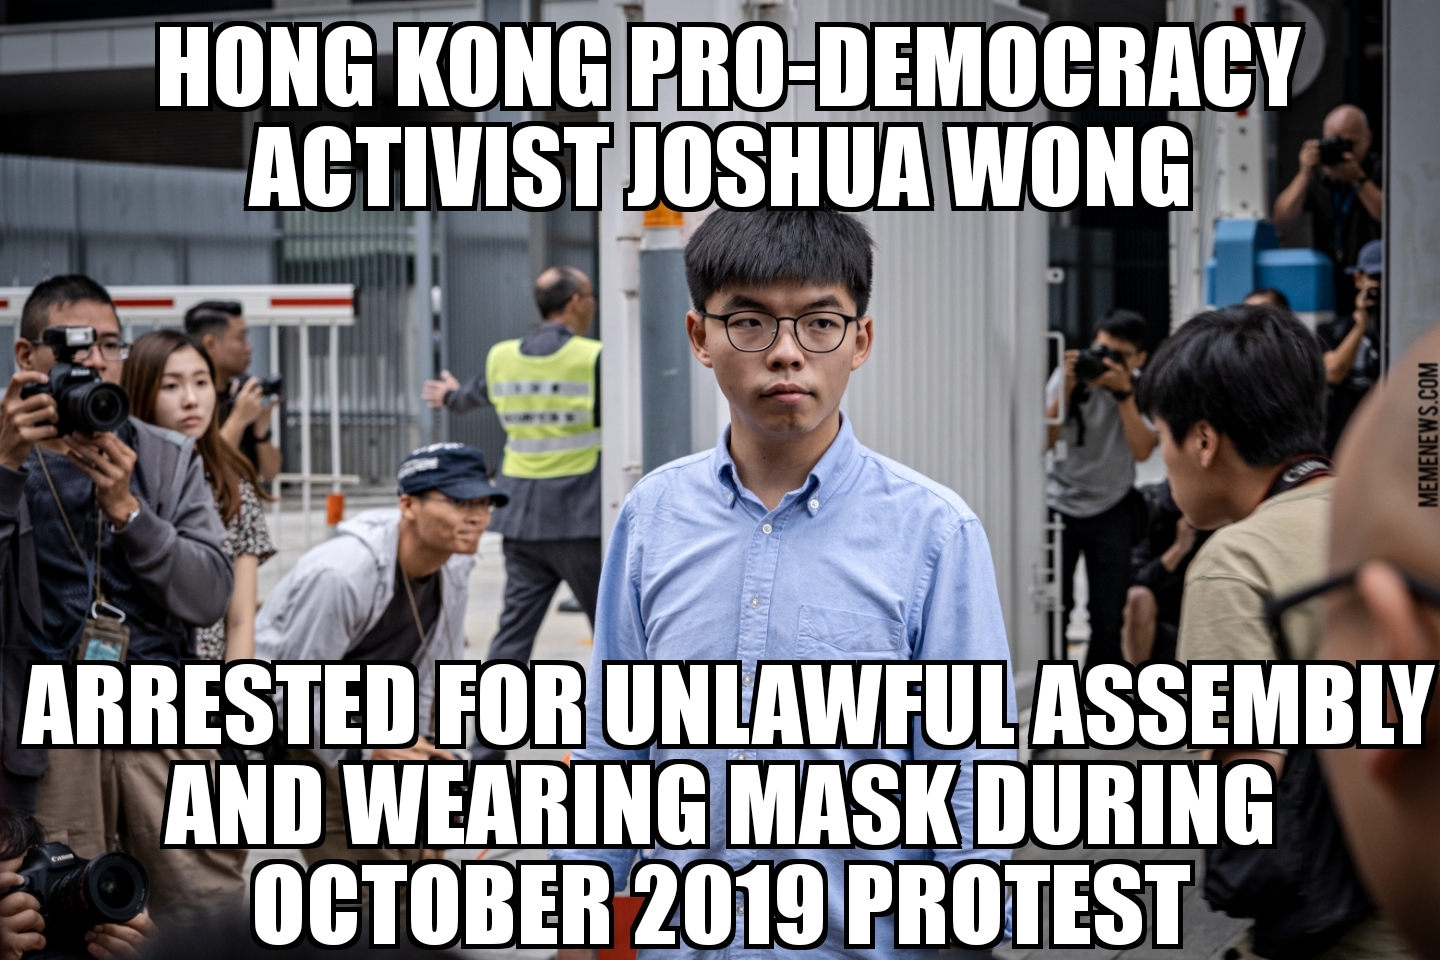 Joshua Wong arrested for wearing mask